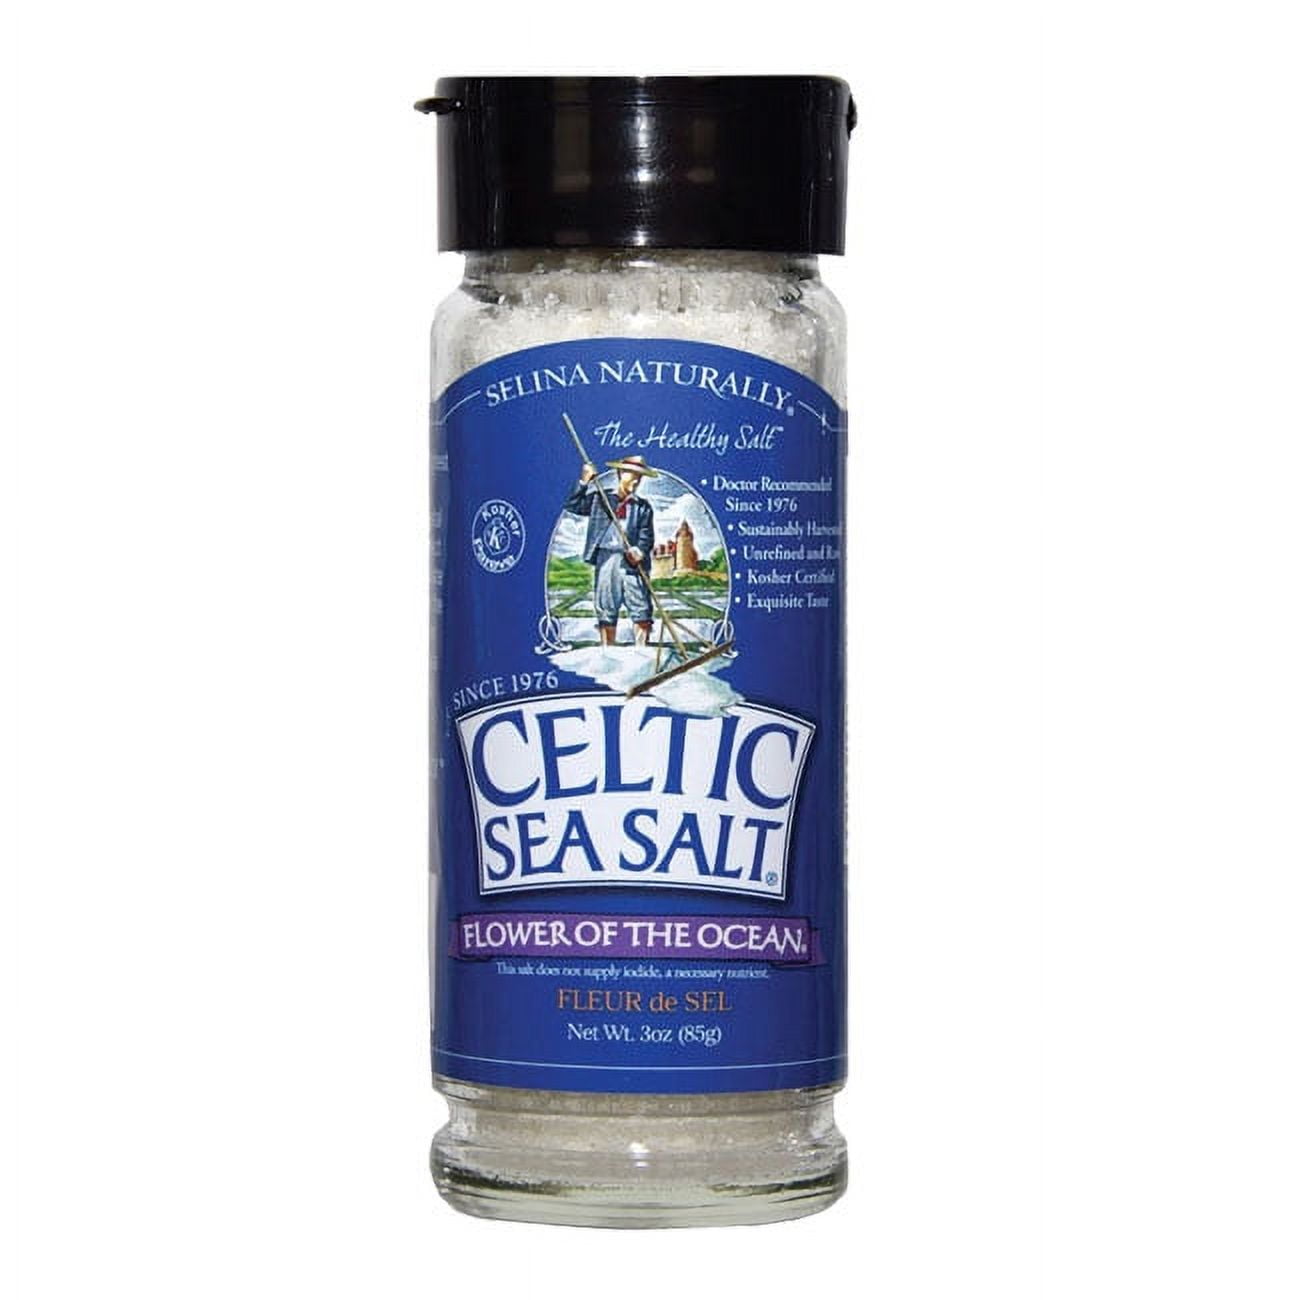 Celtic Sea Salt Flower of the Ocean Sea Salt, 3 Oz Shaker